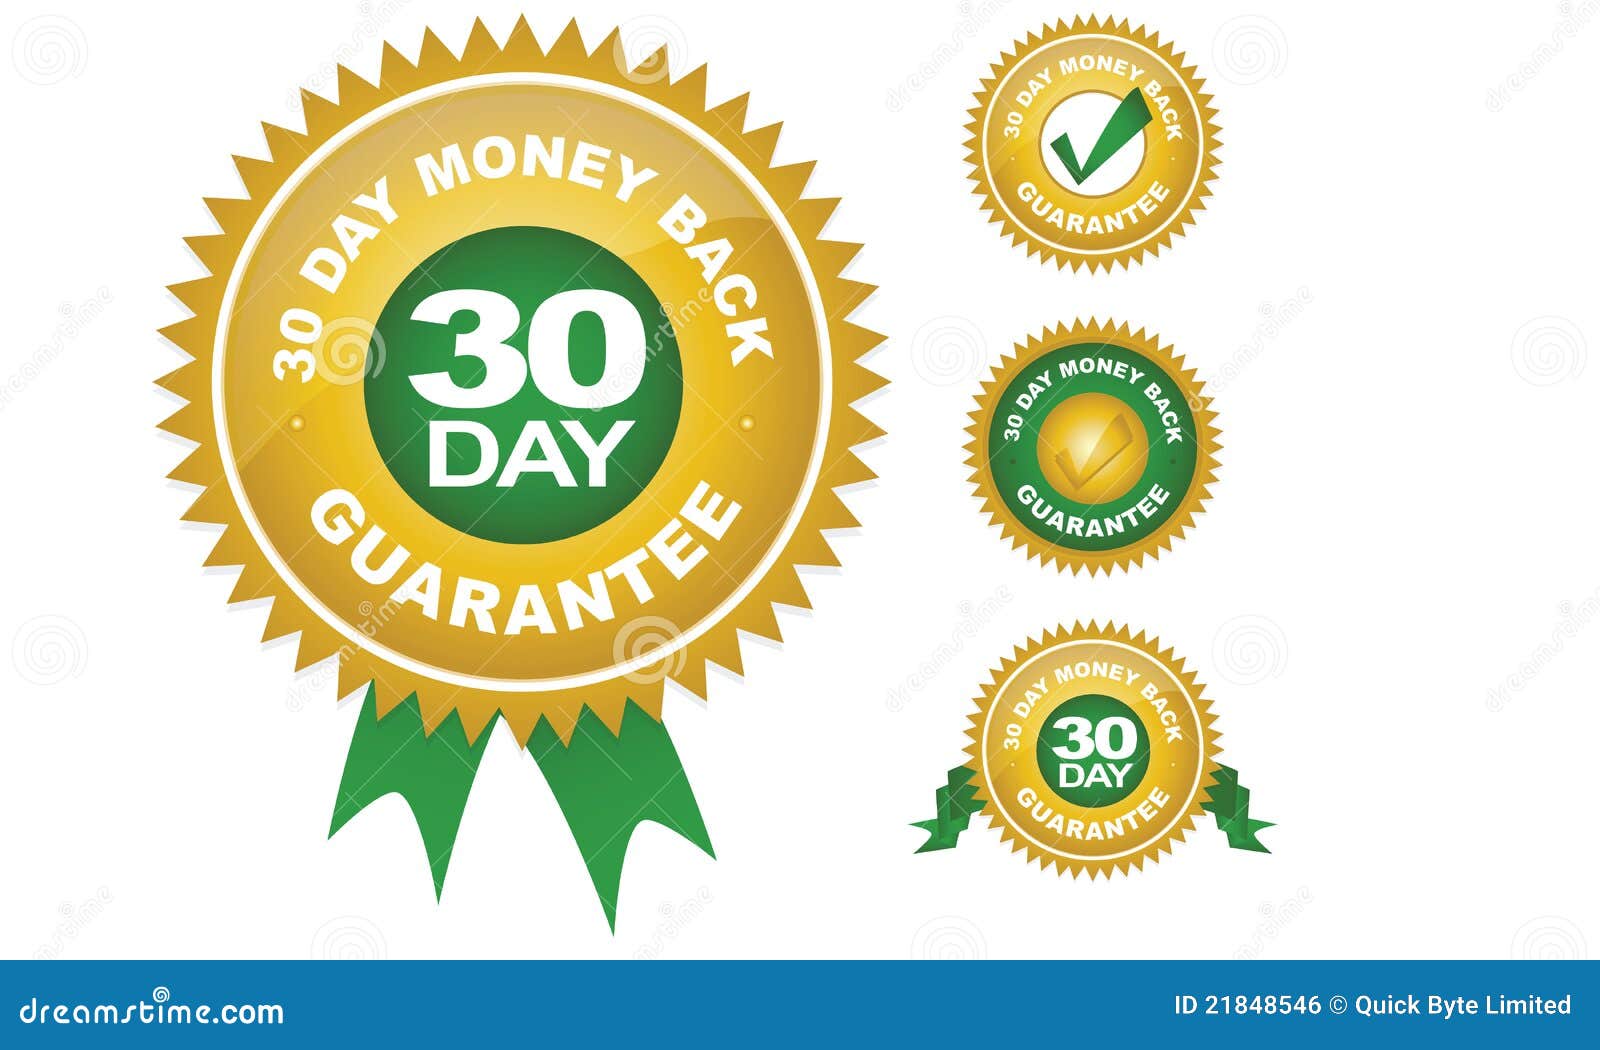 money back guarantee (30 day)